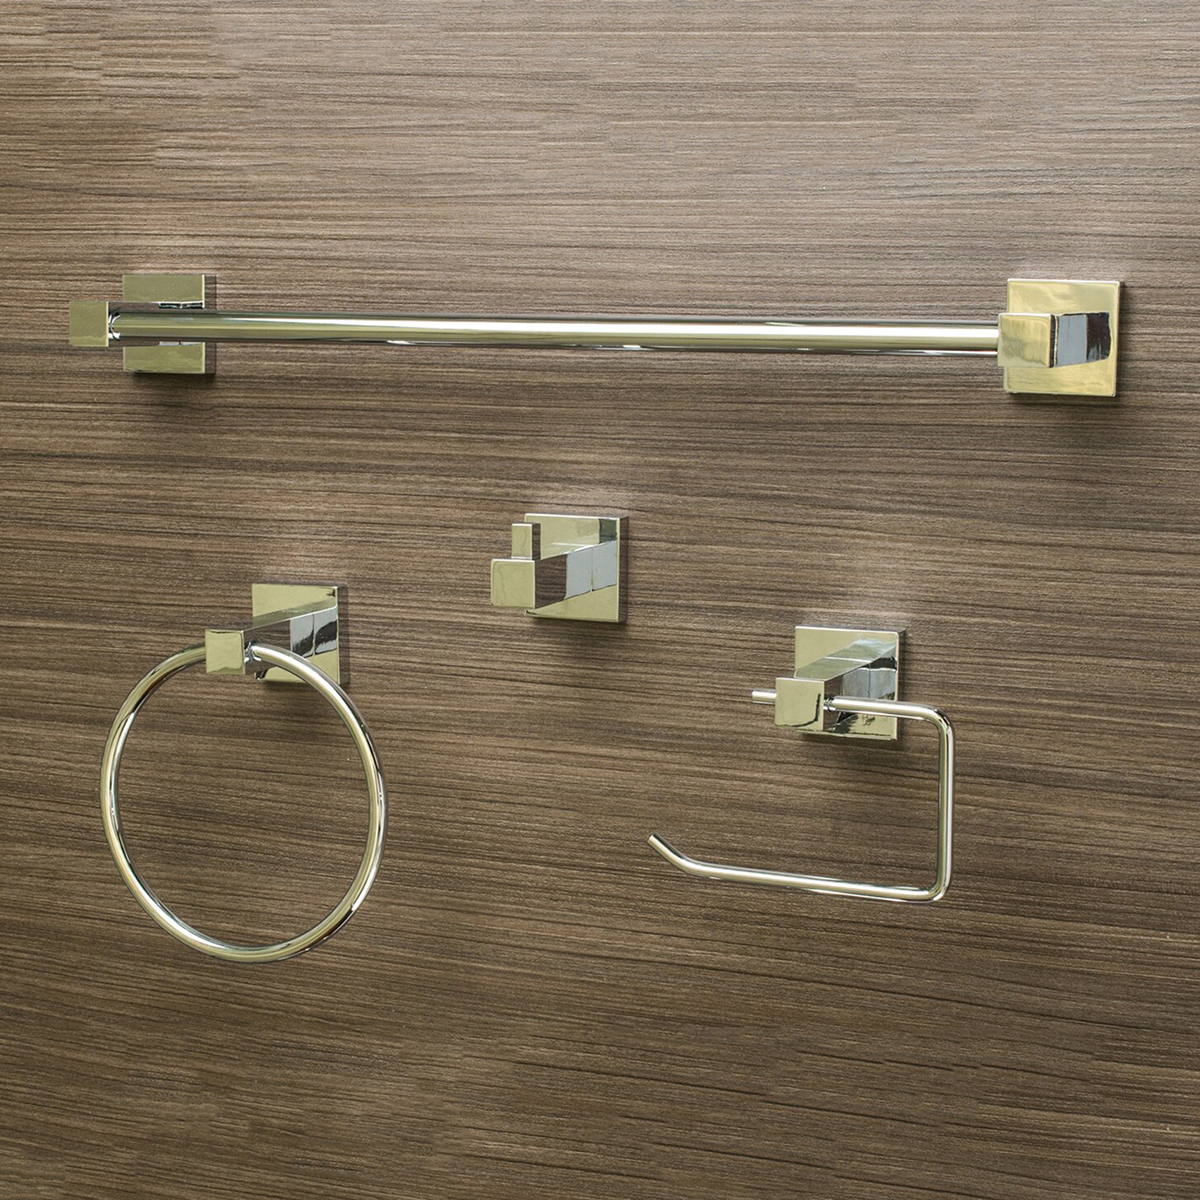 China Manufacturer Low Cost Zinc Alloy 4 Piece Bathroom Hardware Set Bathroom Accessories